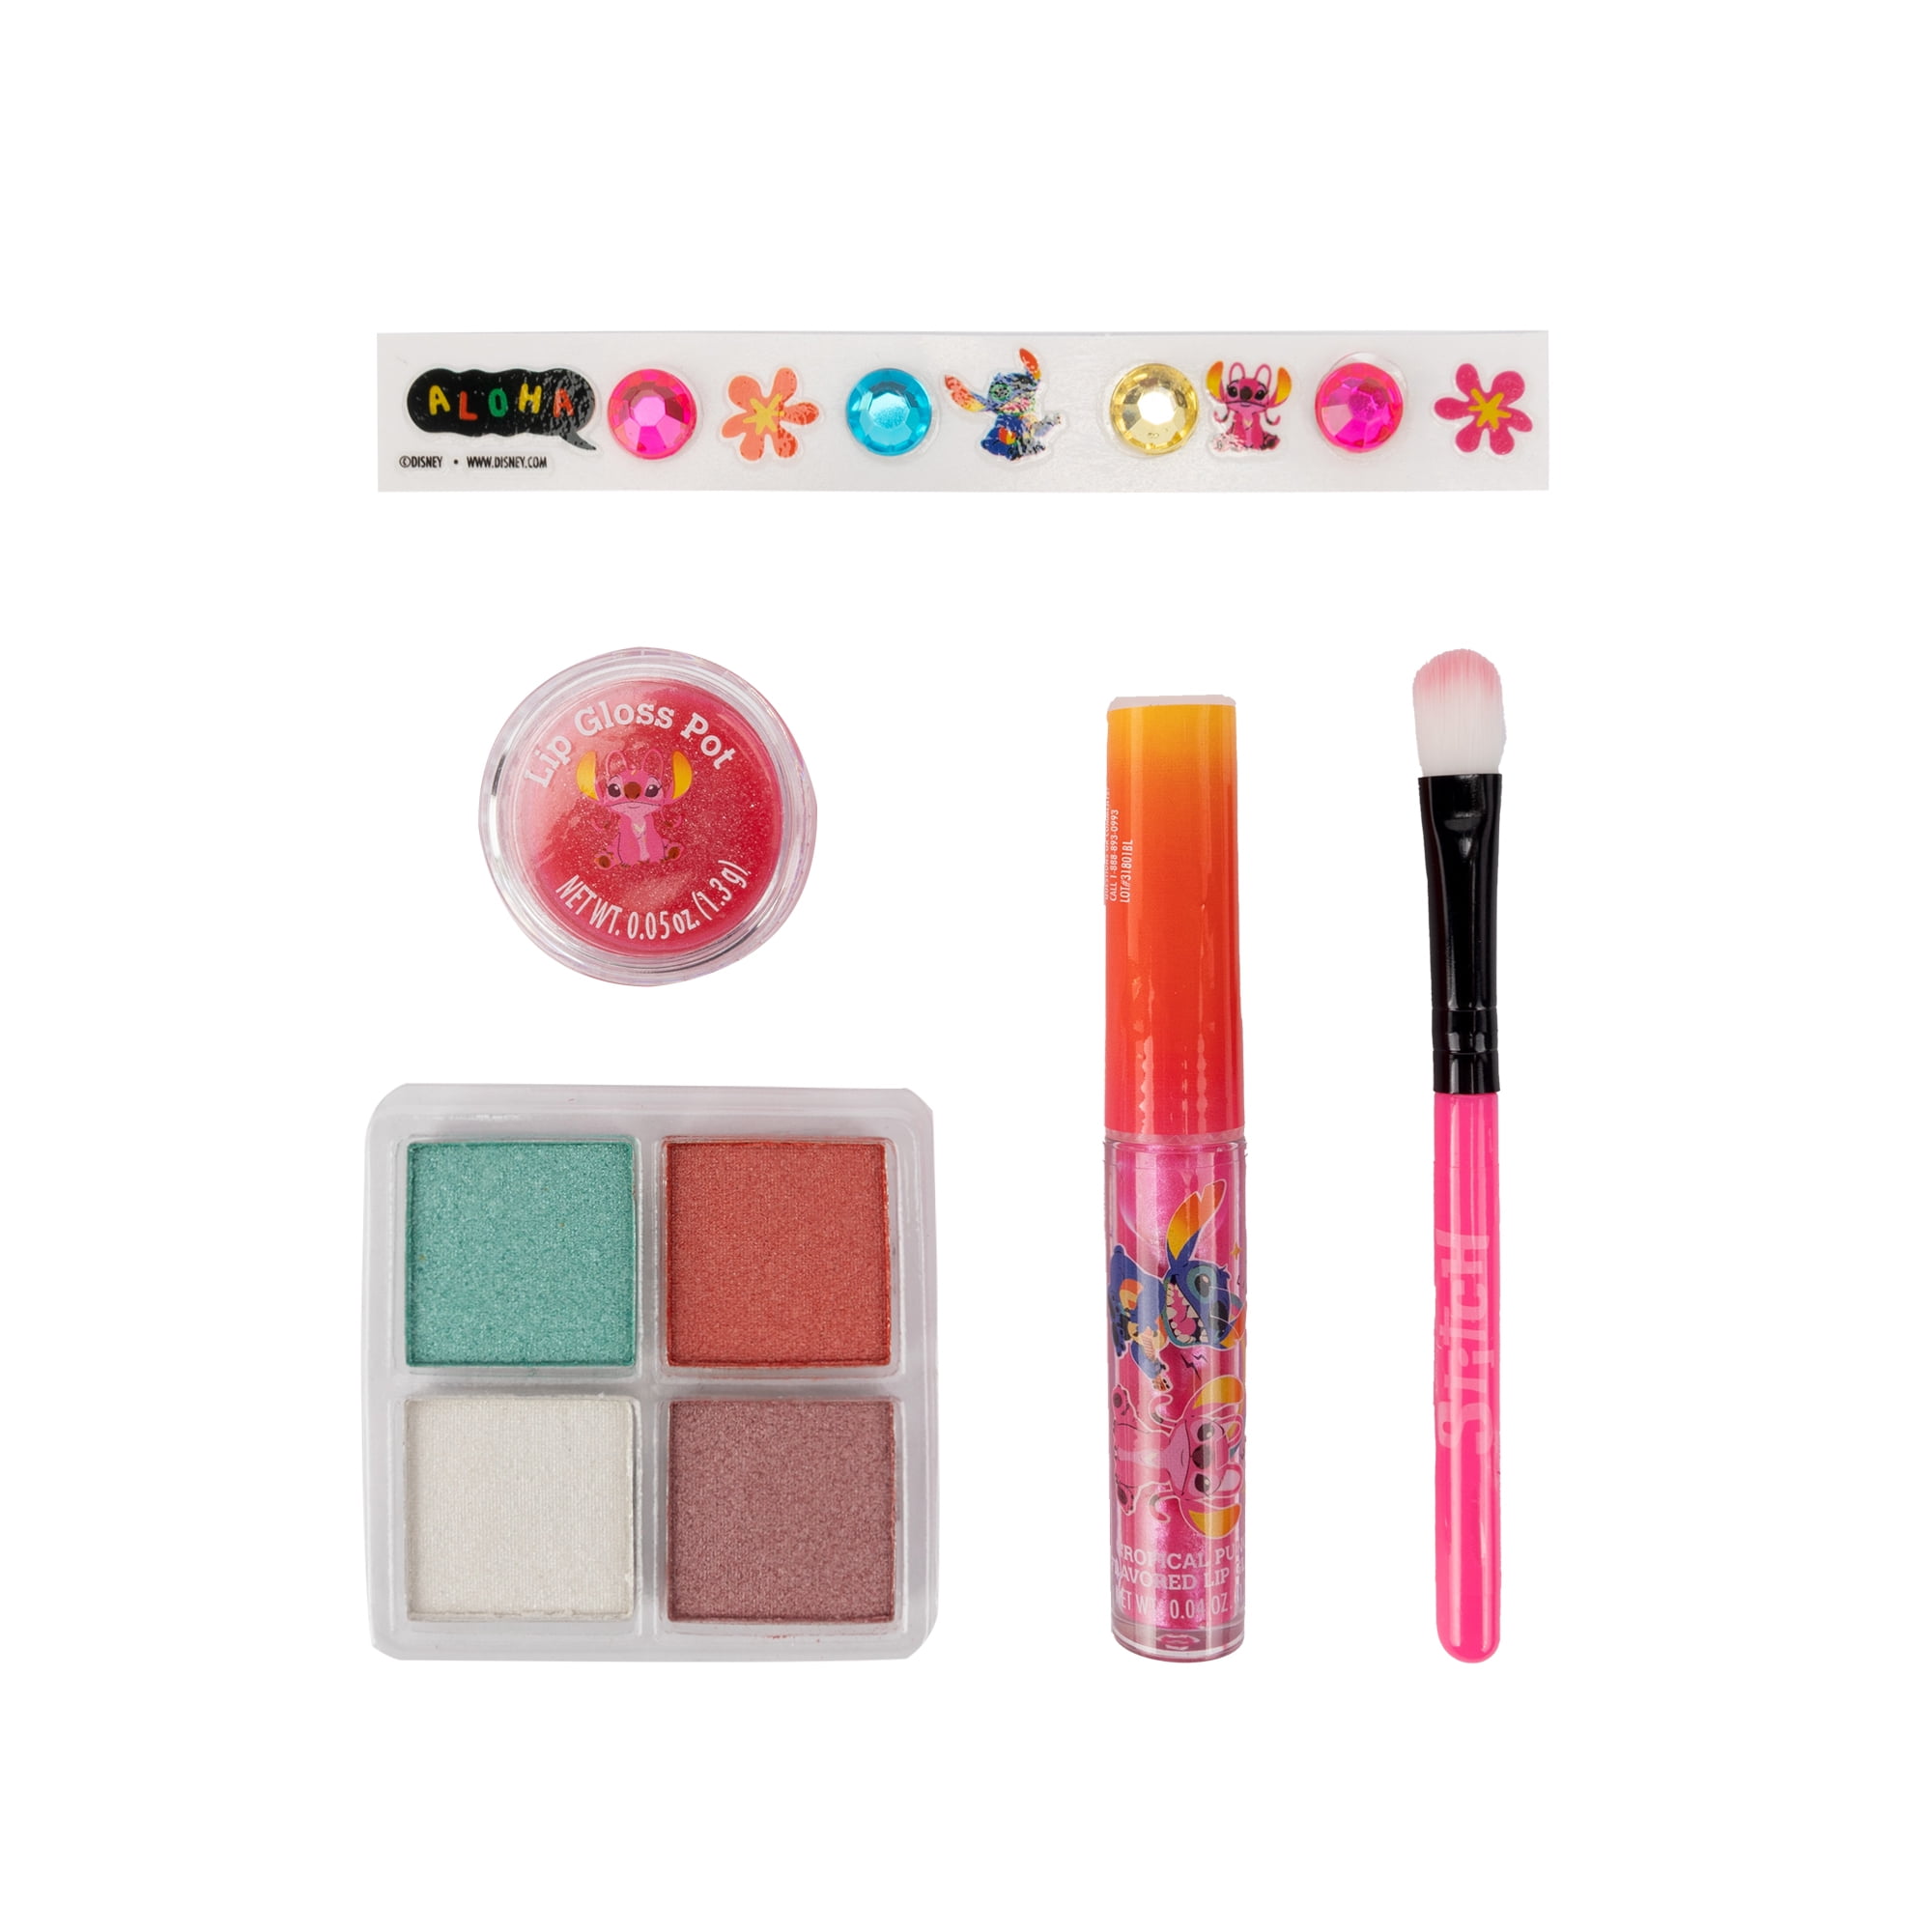 Disney - Kit de pinceaux maquillage Lilo & Stitch - Pinceaux - Mad beauty - Pinceaux  maquillage - Makeup - Stitch - Lilo & stitch